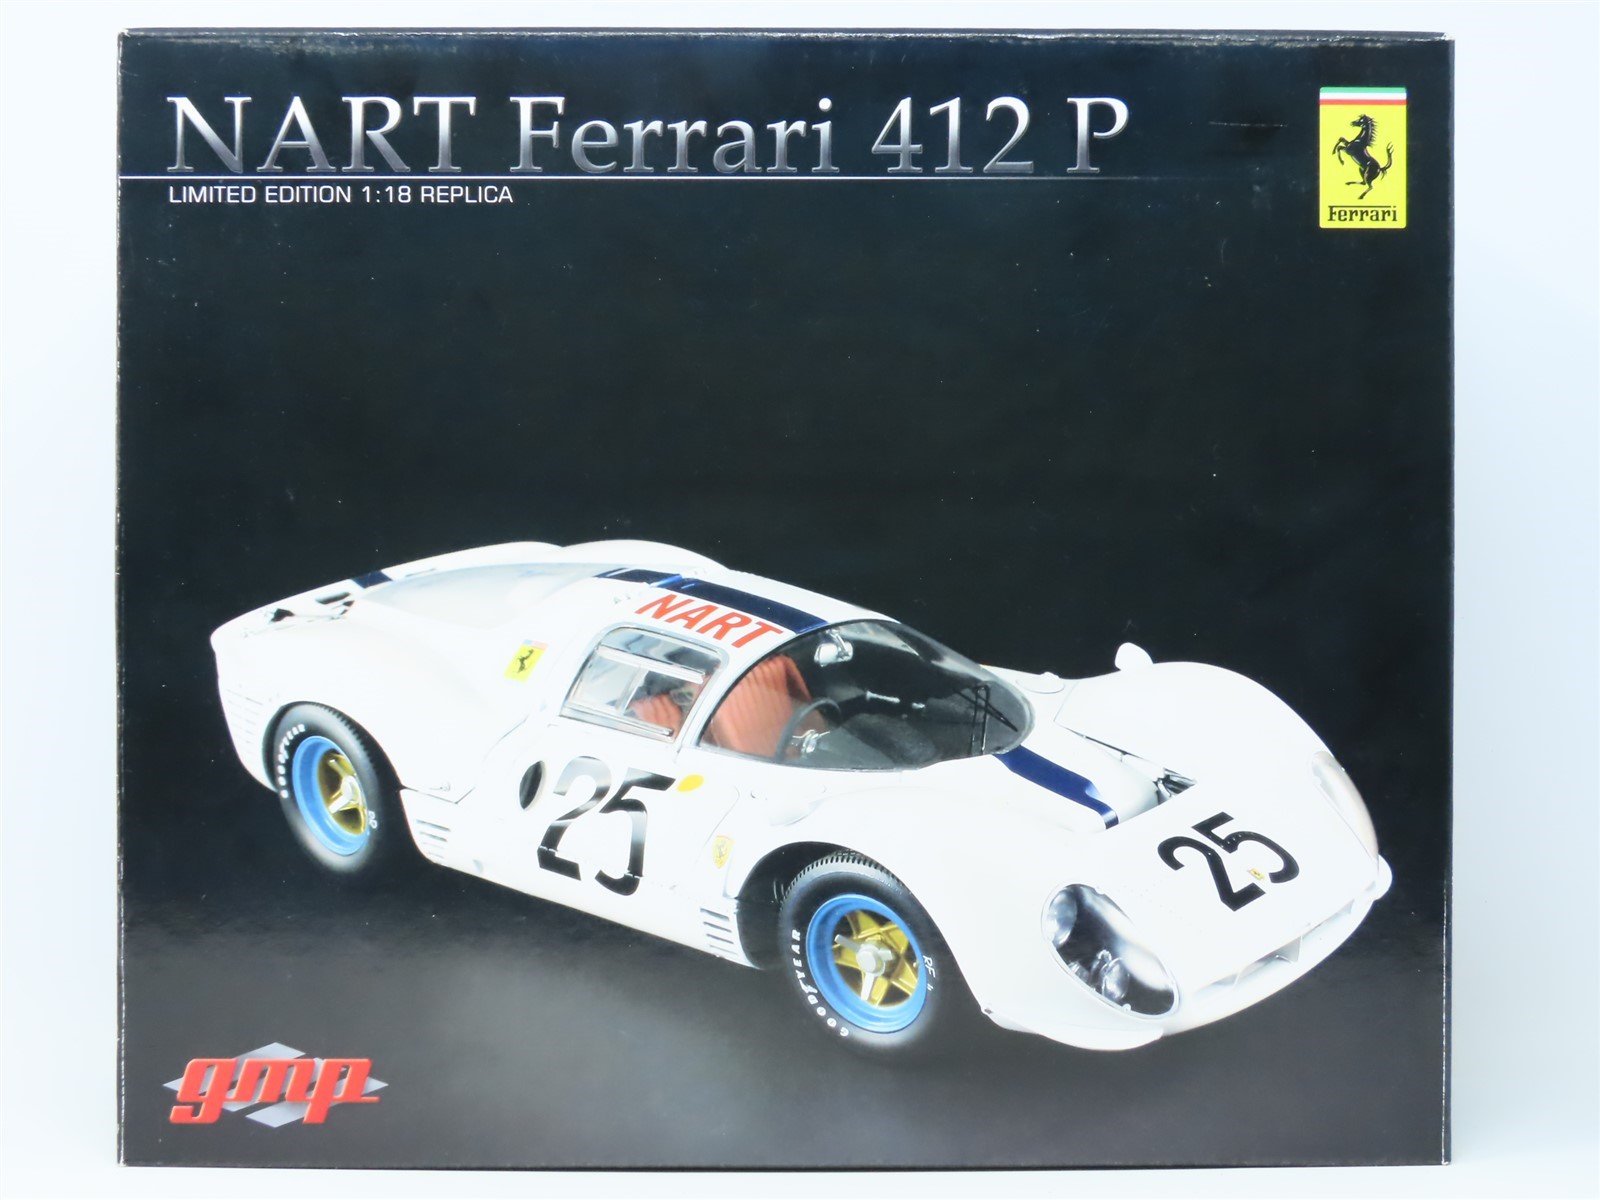 半額1/18 Ferrari 412 P N.A.R.T. #25 Le Mans 24h 1967 ◆ フェラーリ Jouef Evolution レーシングカー